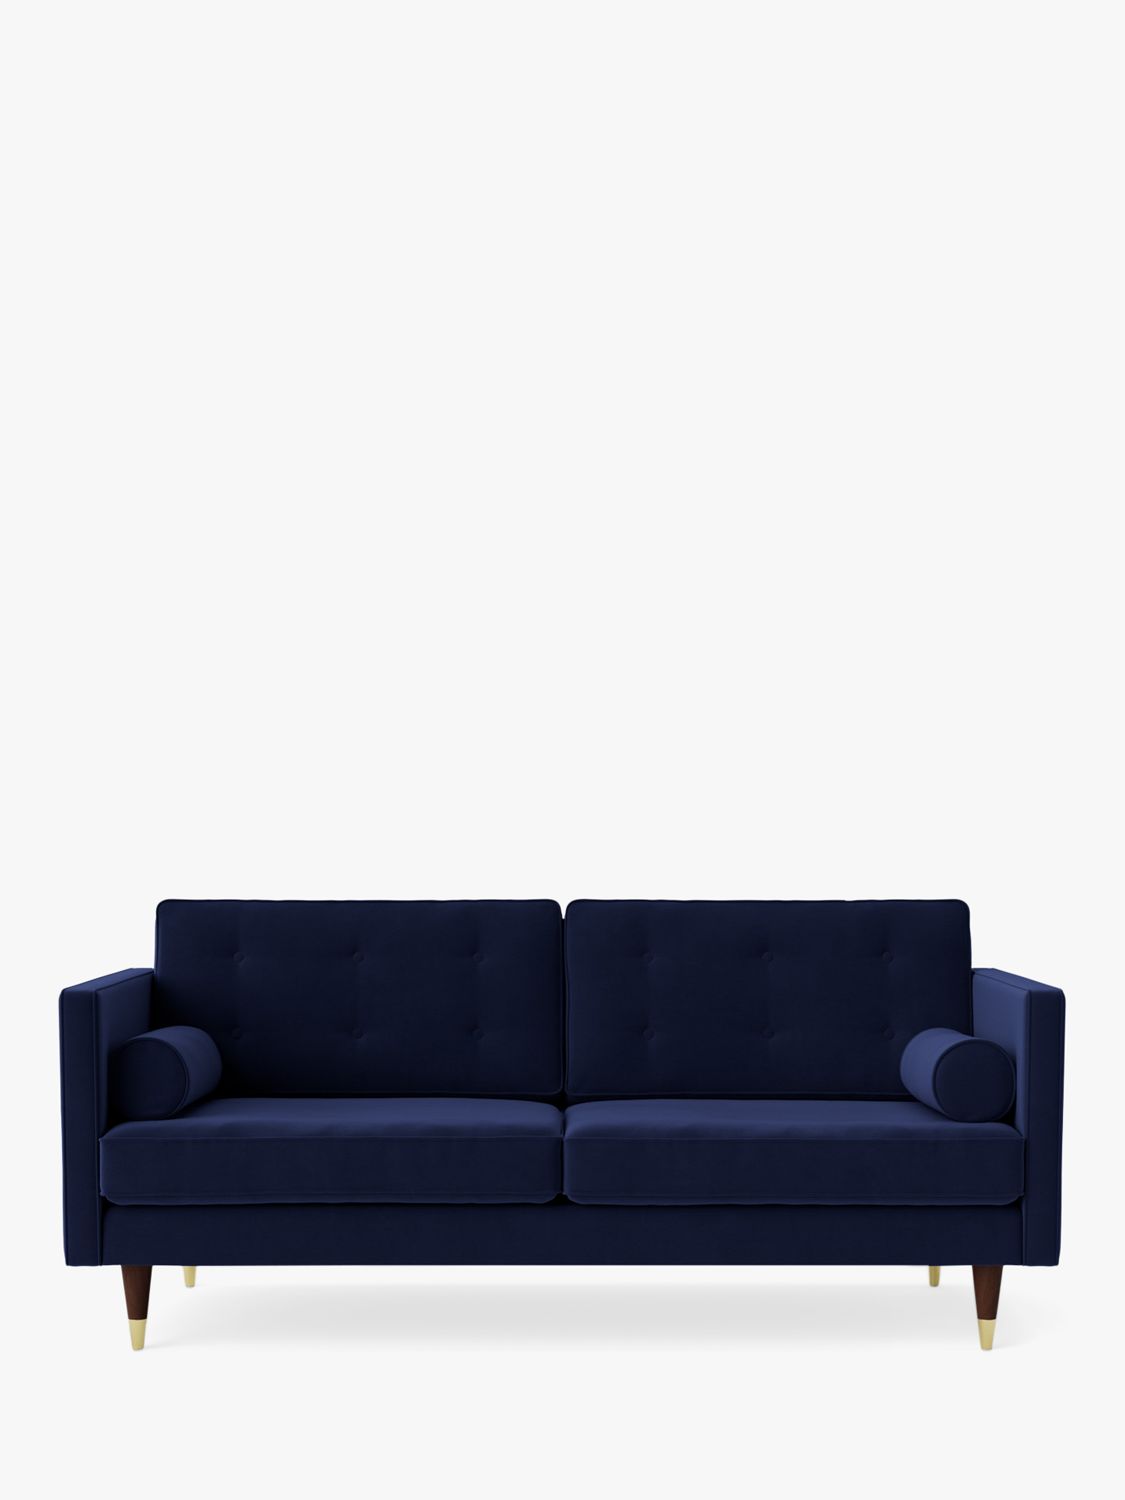 Porto Range, Swoon Porto Medium 2 Seater Sofa, Dark Leg, Ink Velvet